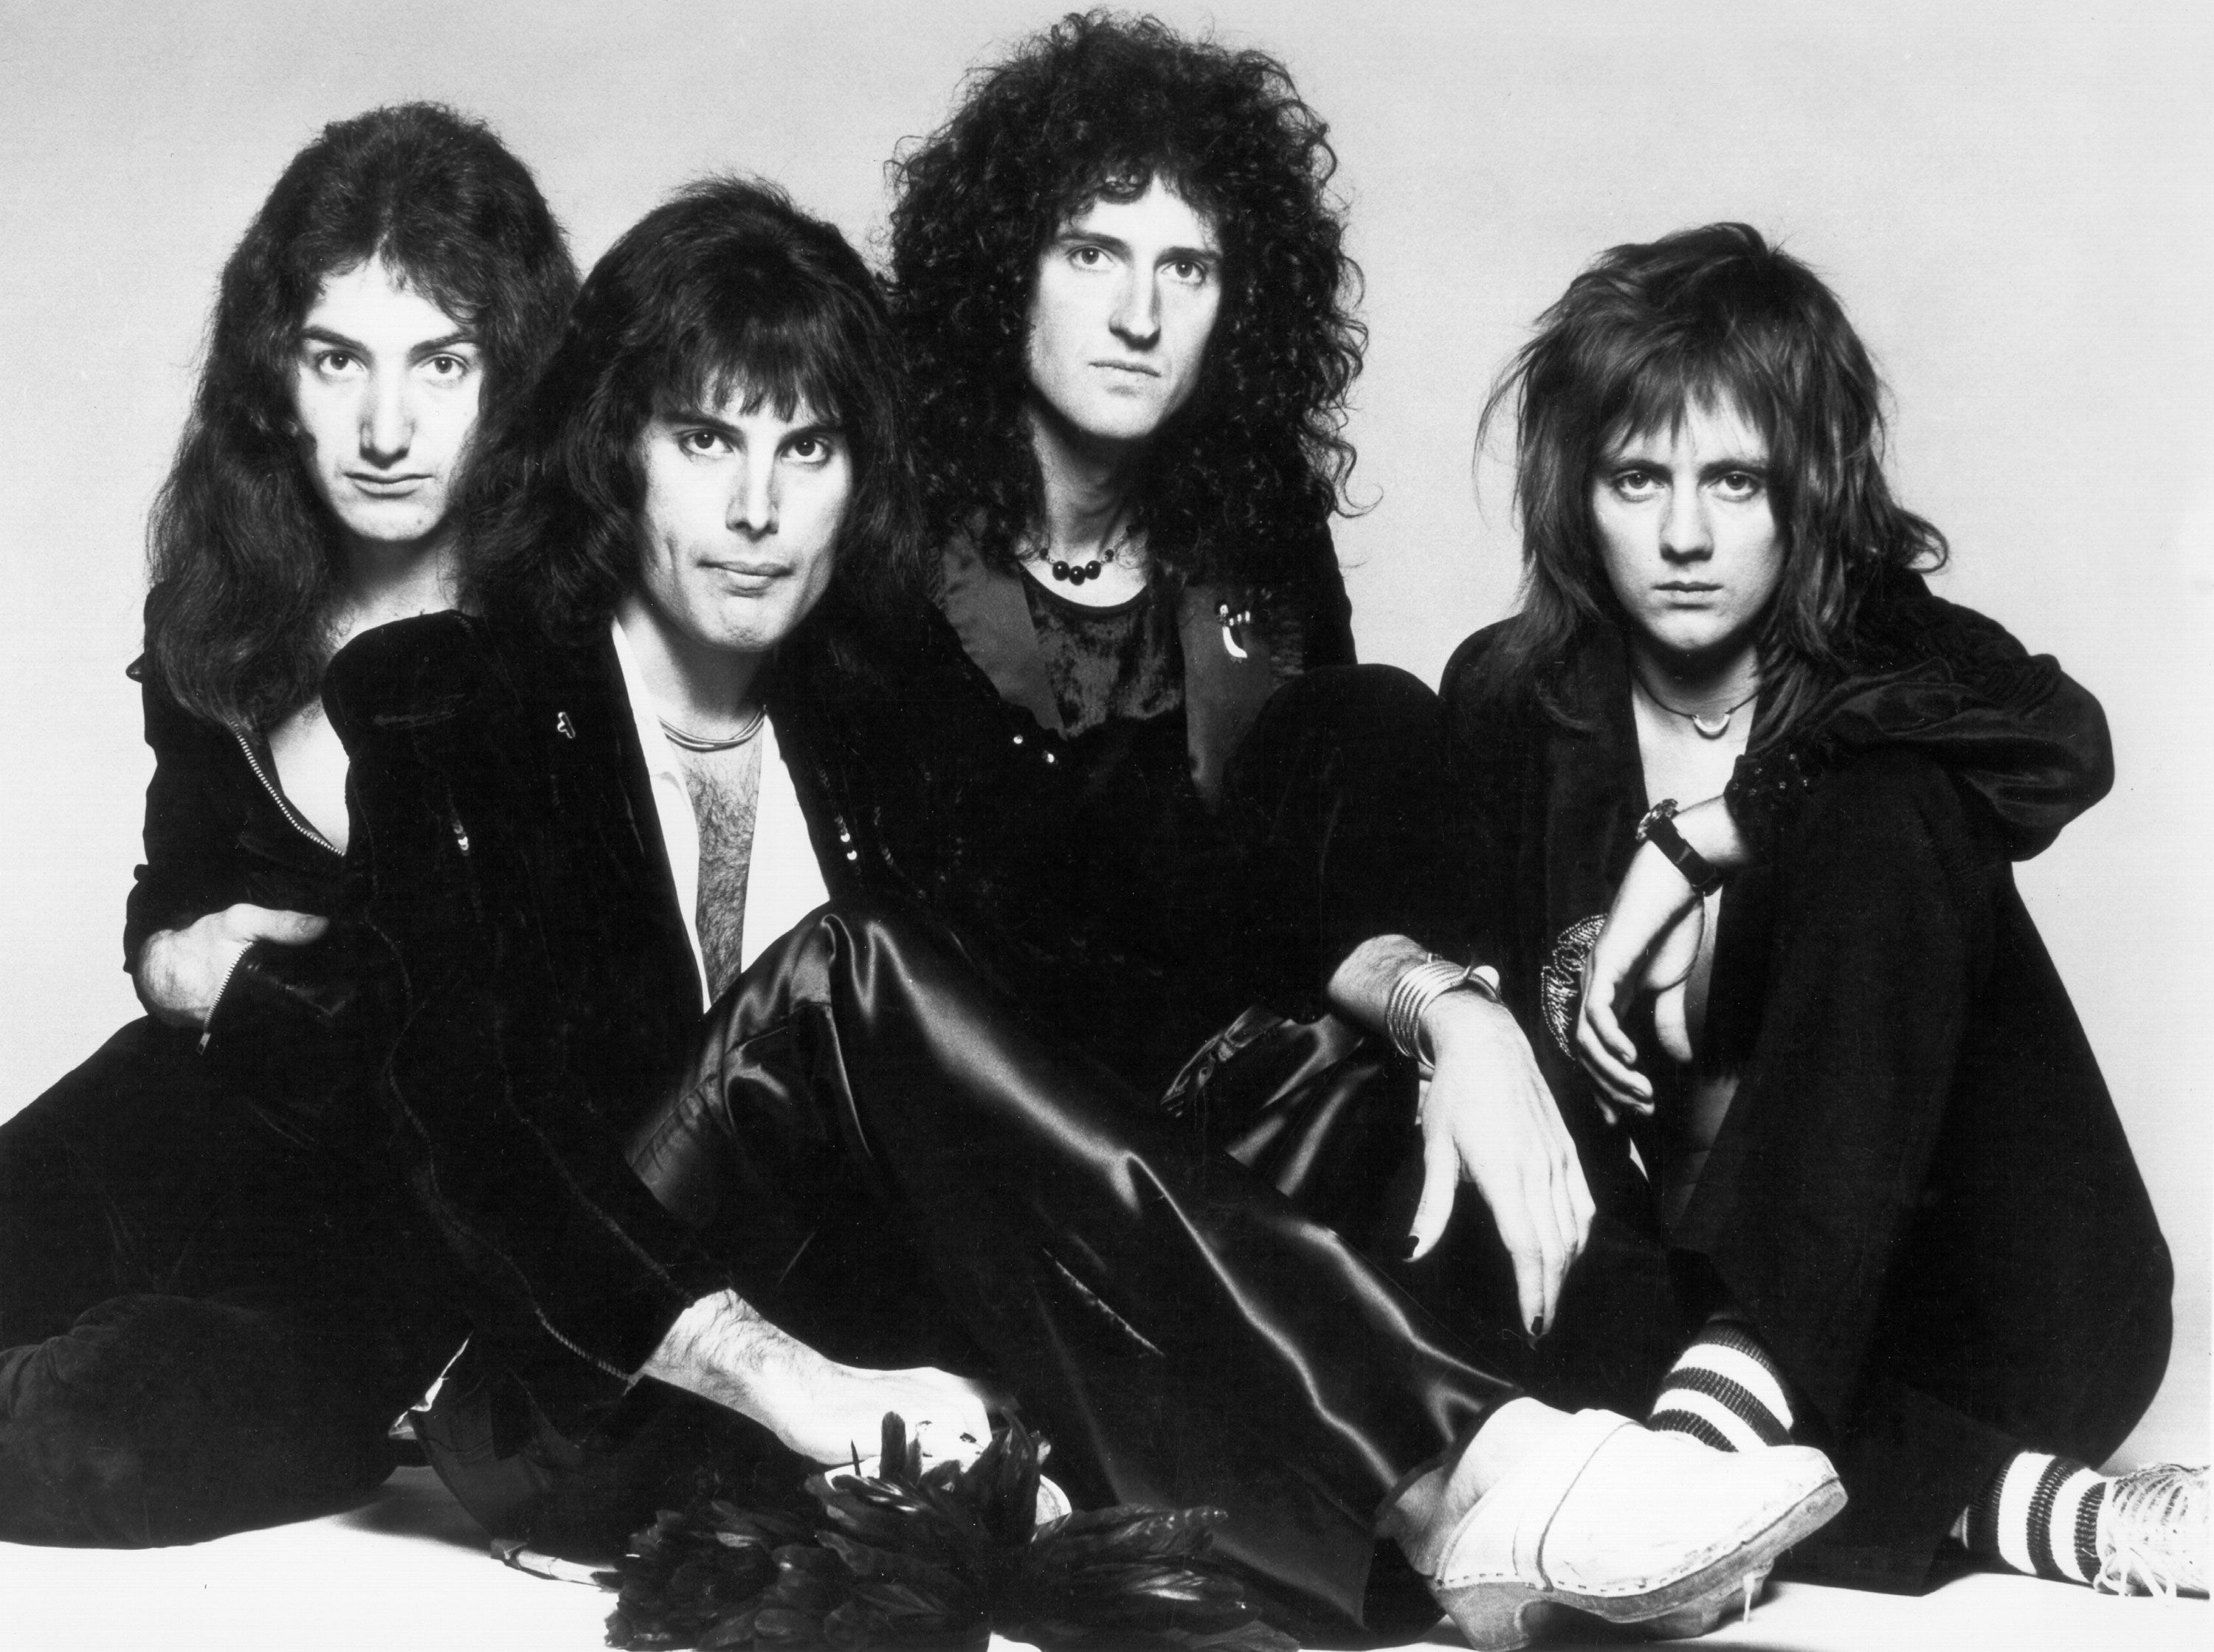 Queen release 'Face It Alone,' featuring Freddie Mercury